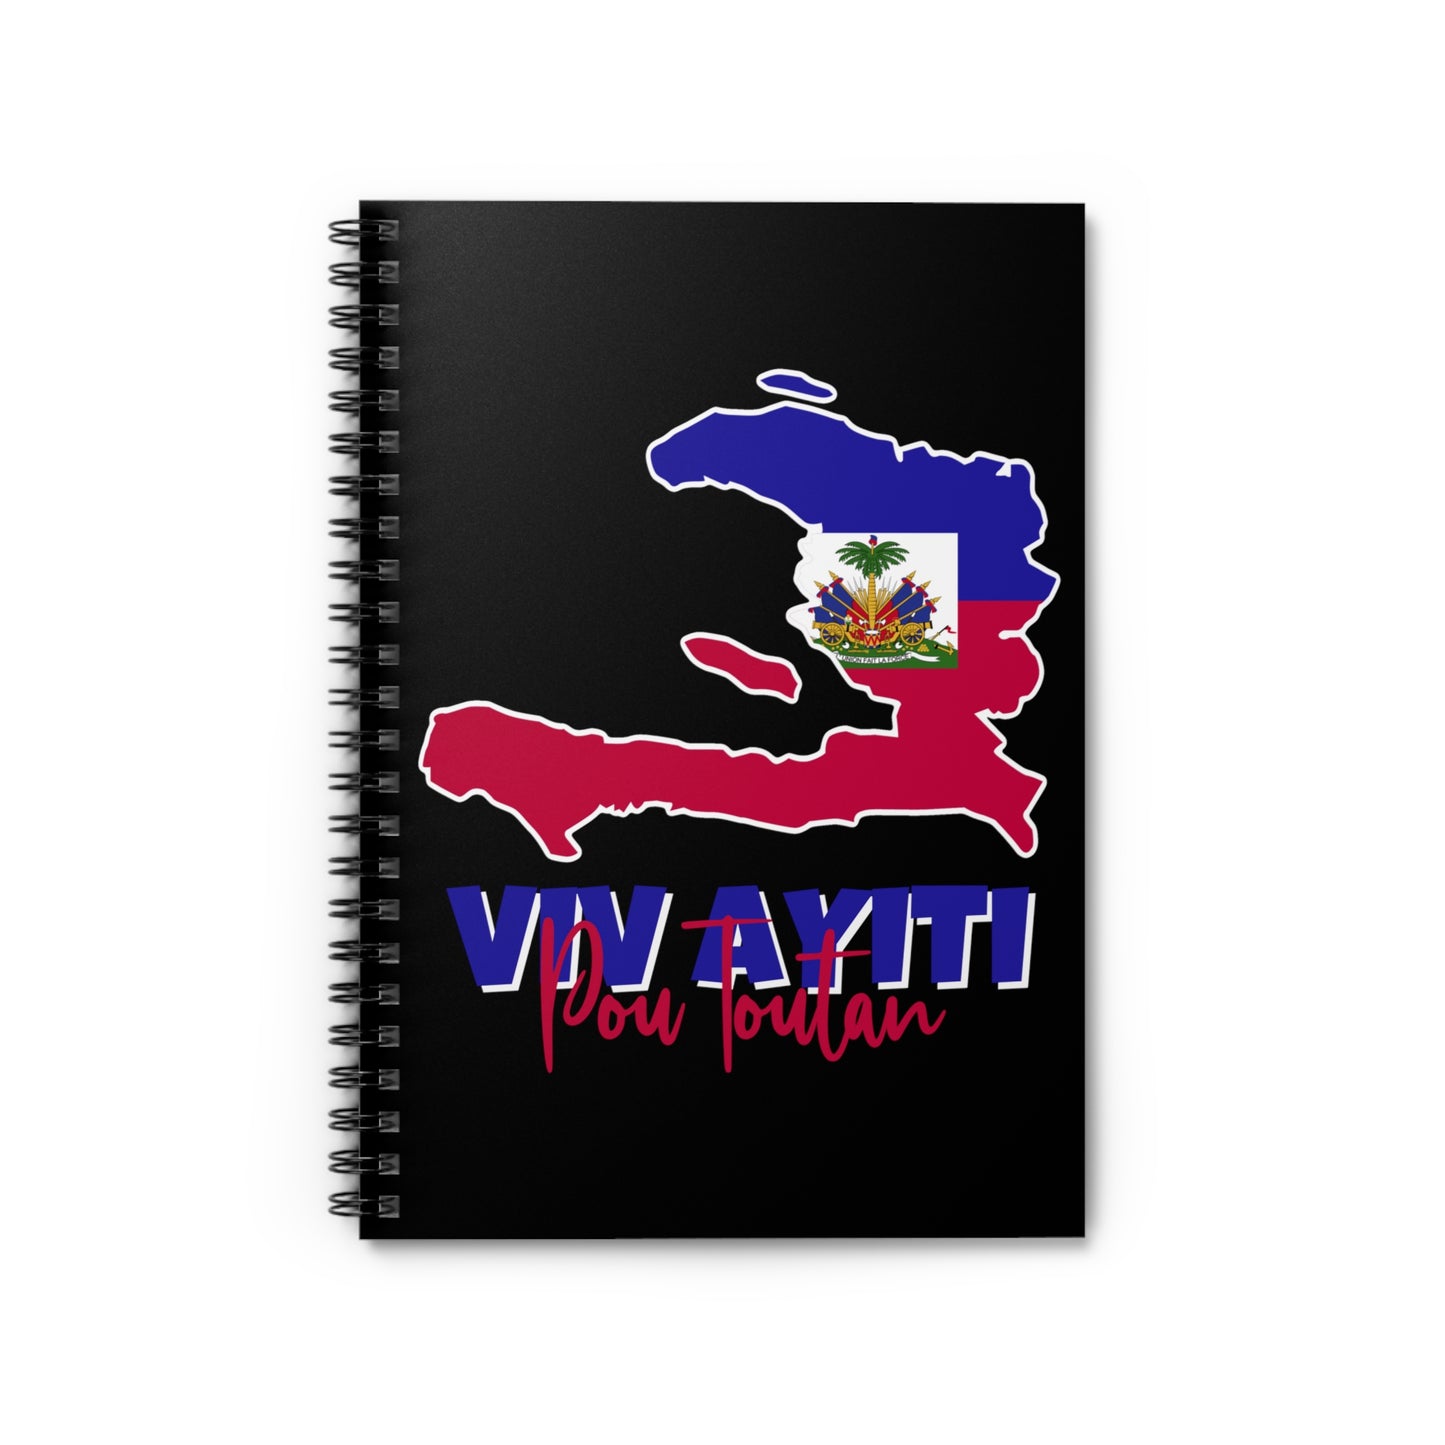 Viv Ayiti Pou Toutan Haitian Forever Haiti Spiral Notebook - Ruled Line